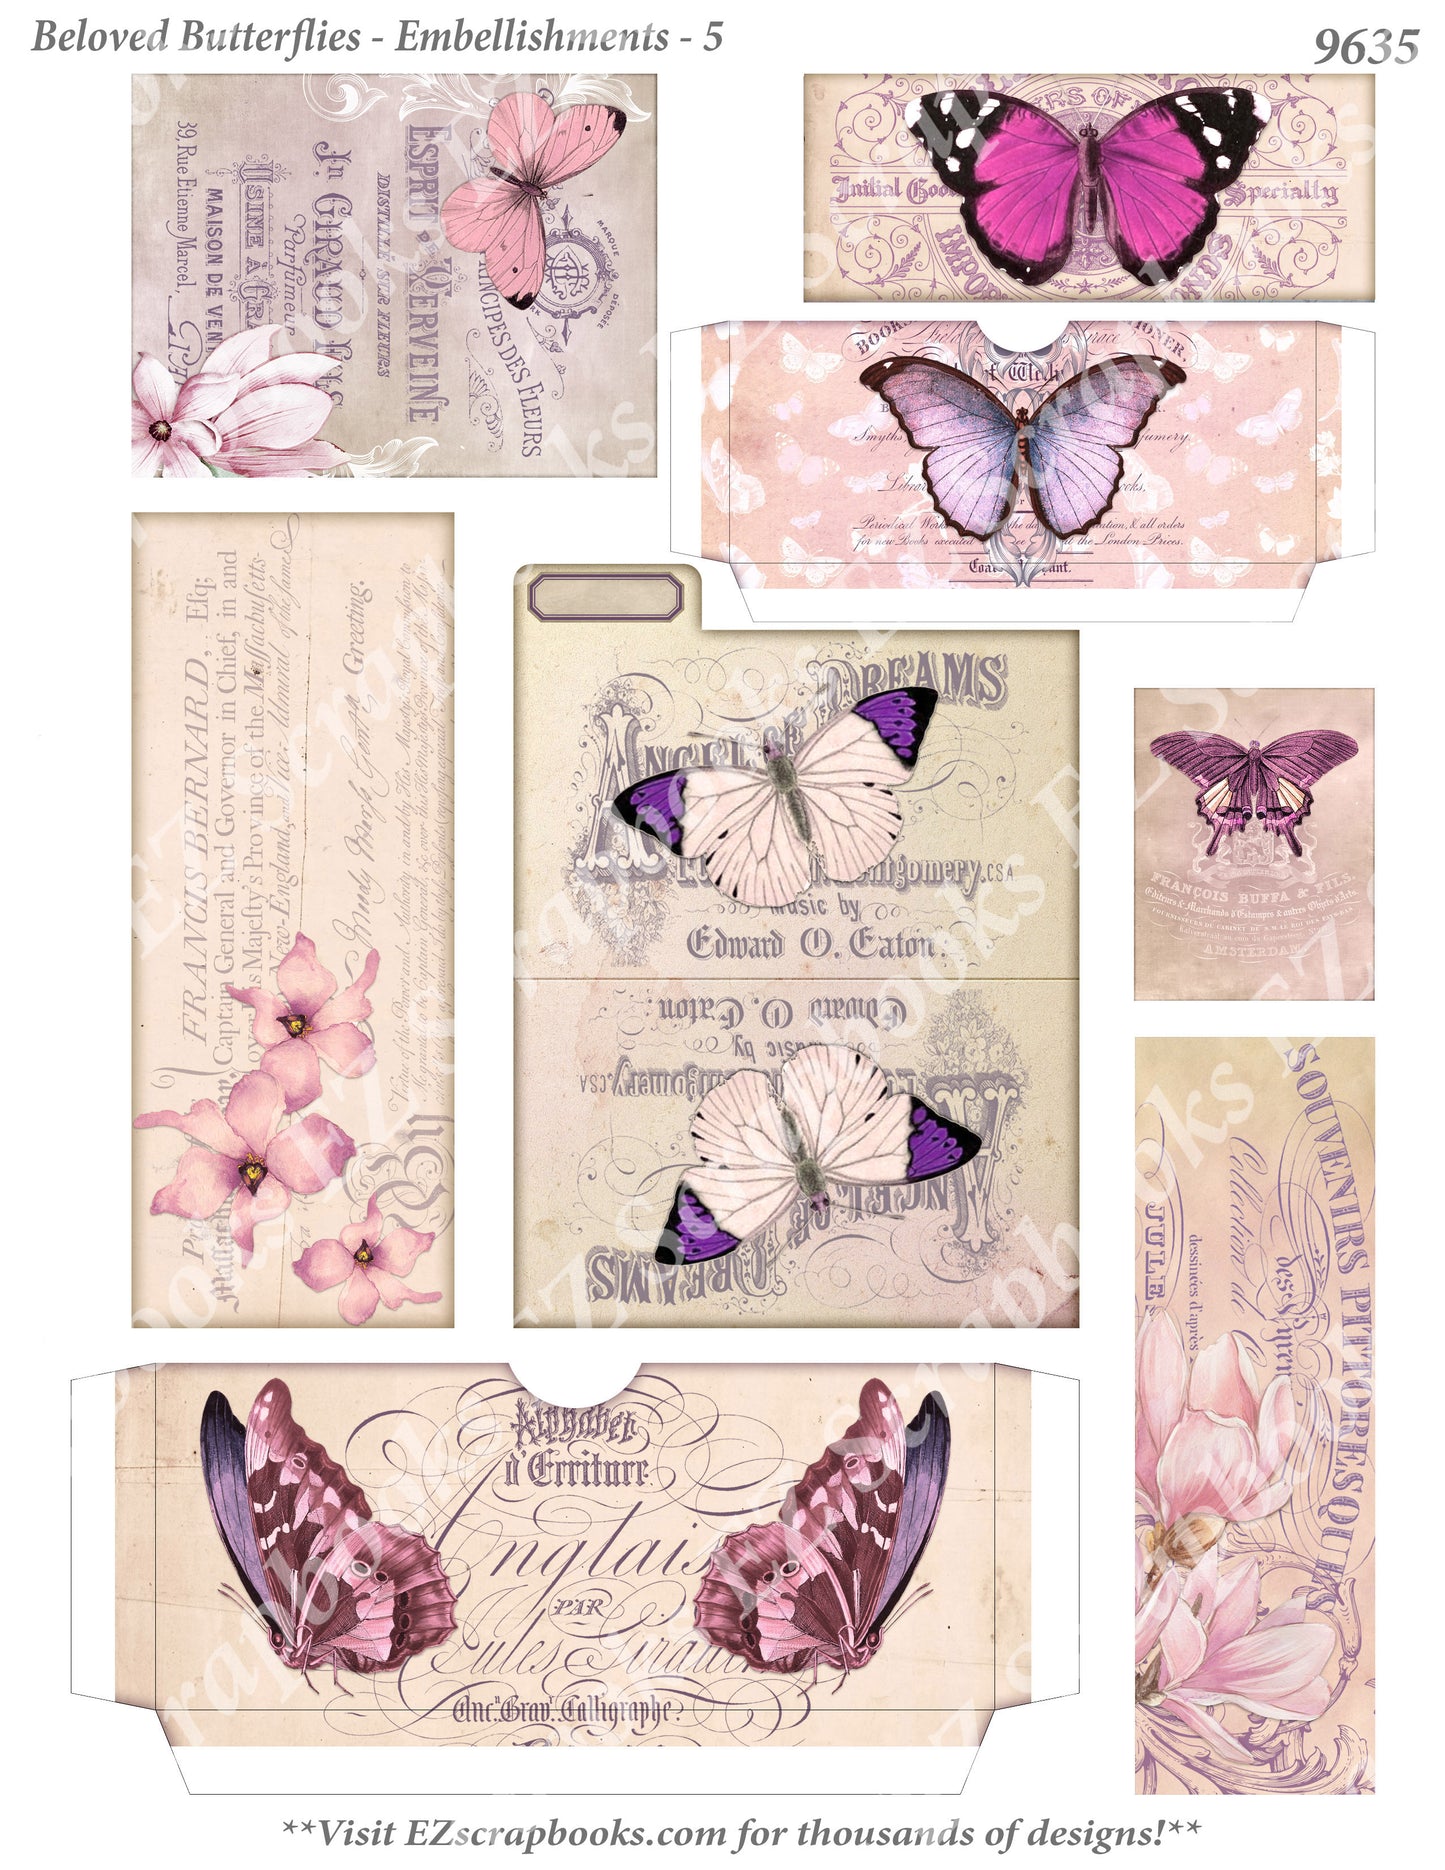 Beloved Butterflies - Embellishments - 5 - 9635